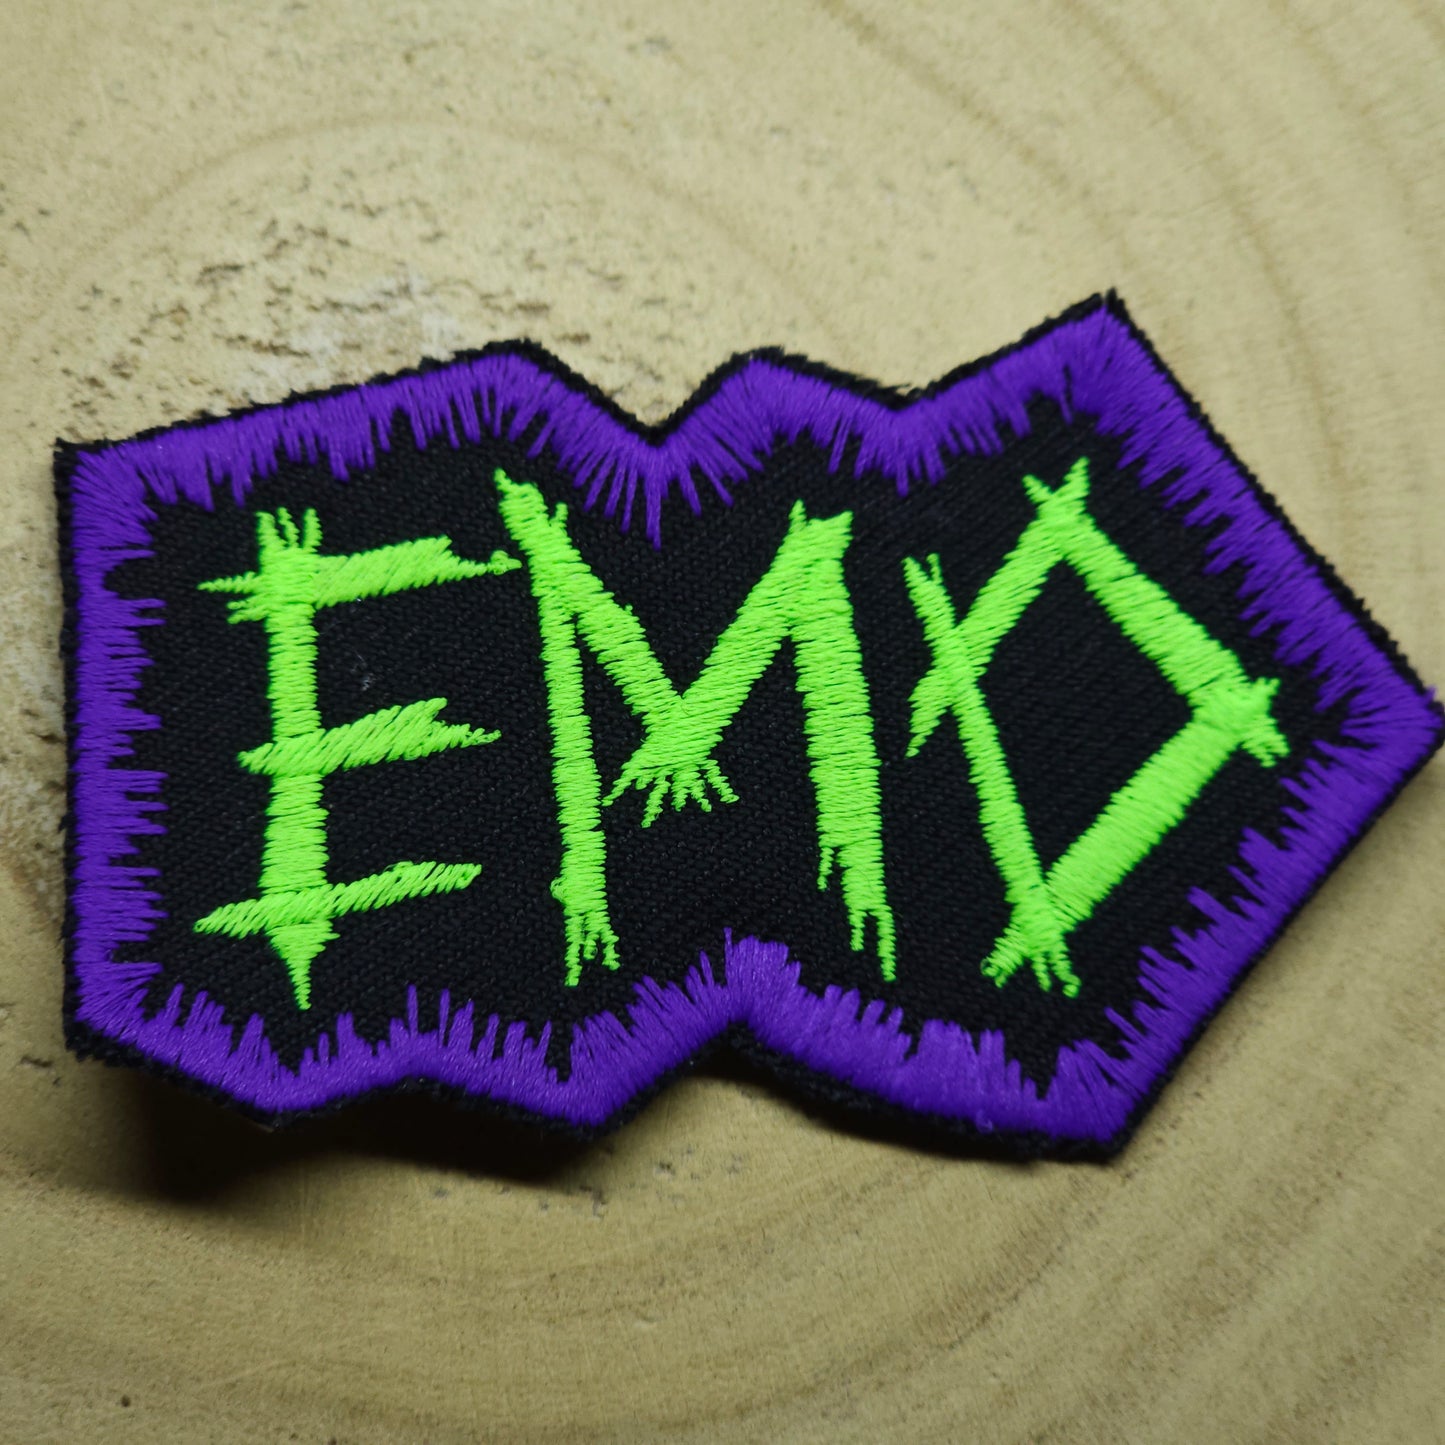 Emo Patch New Matt colour threads!